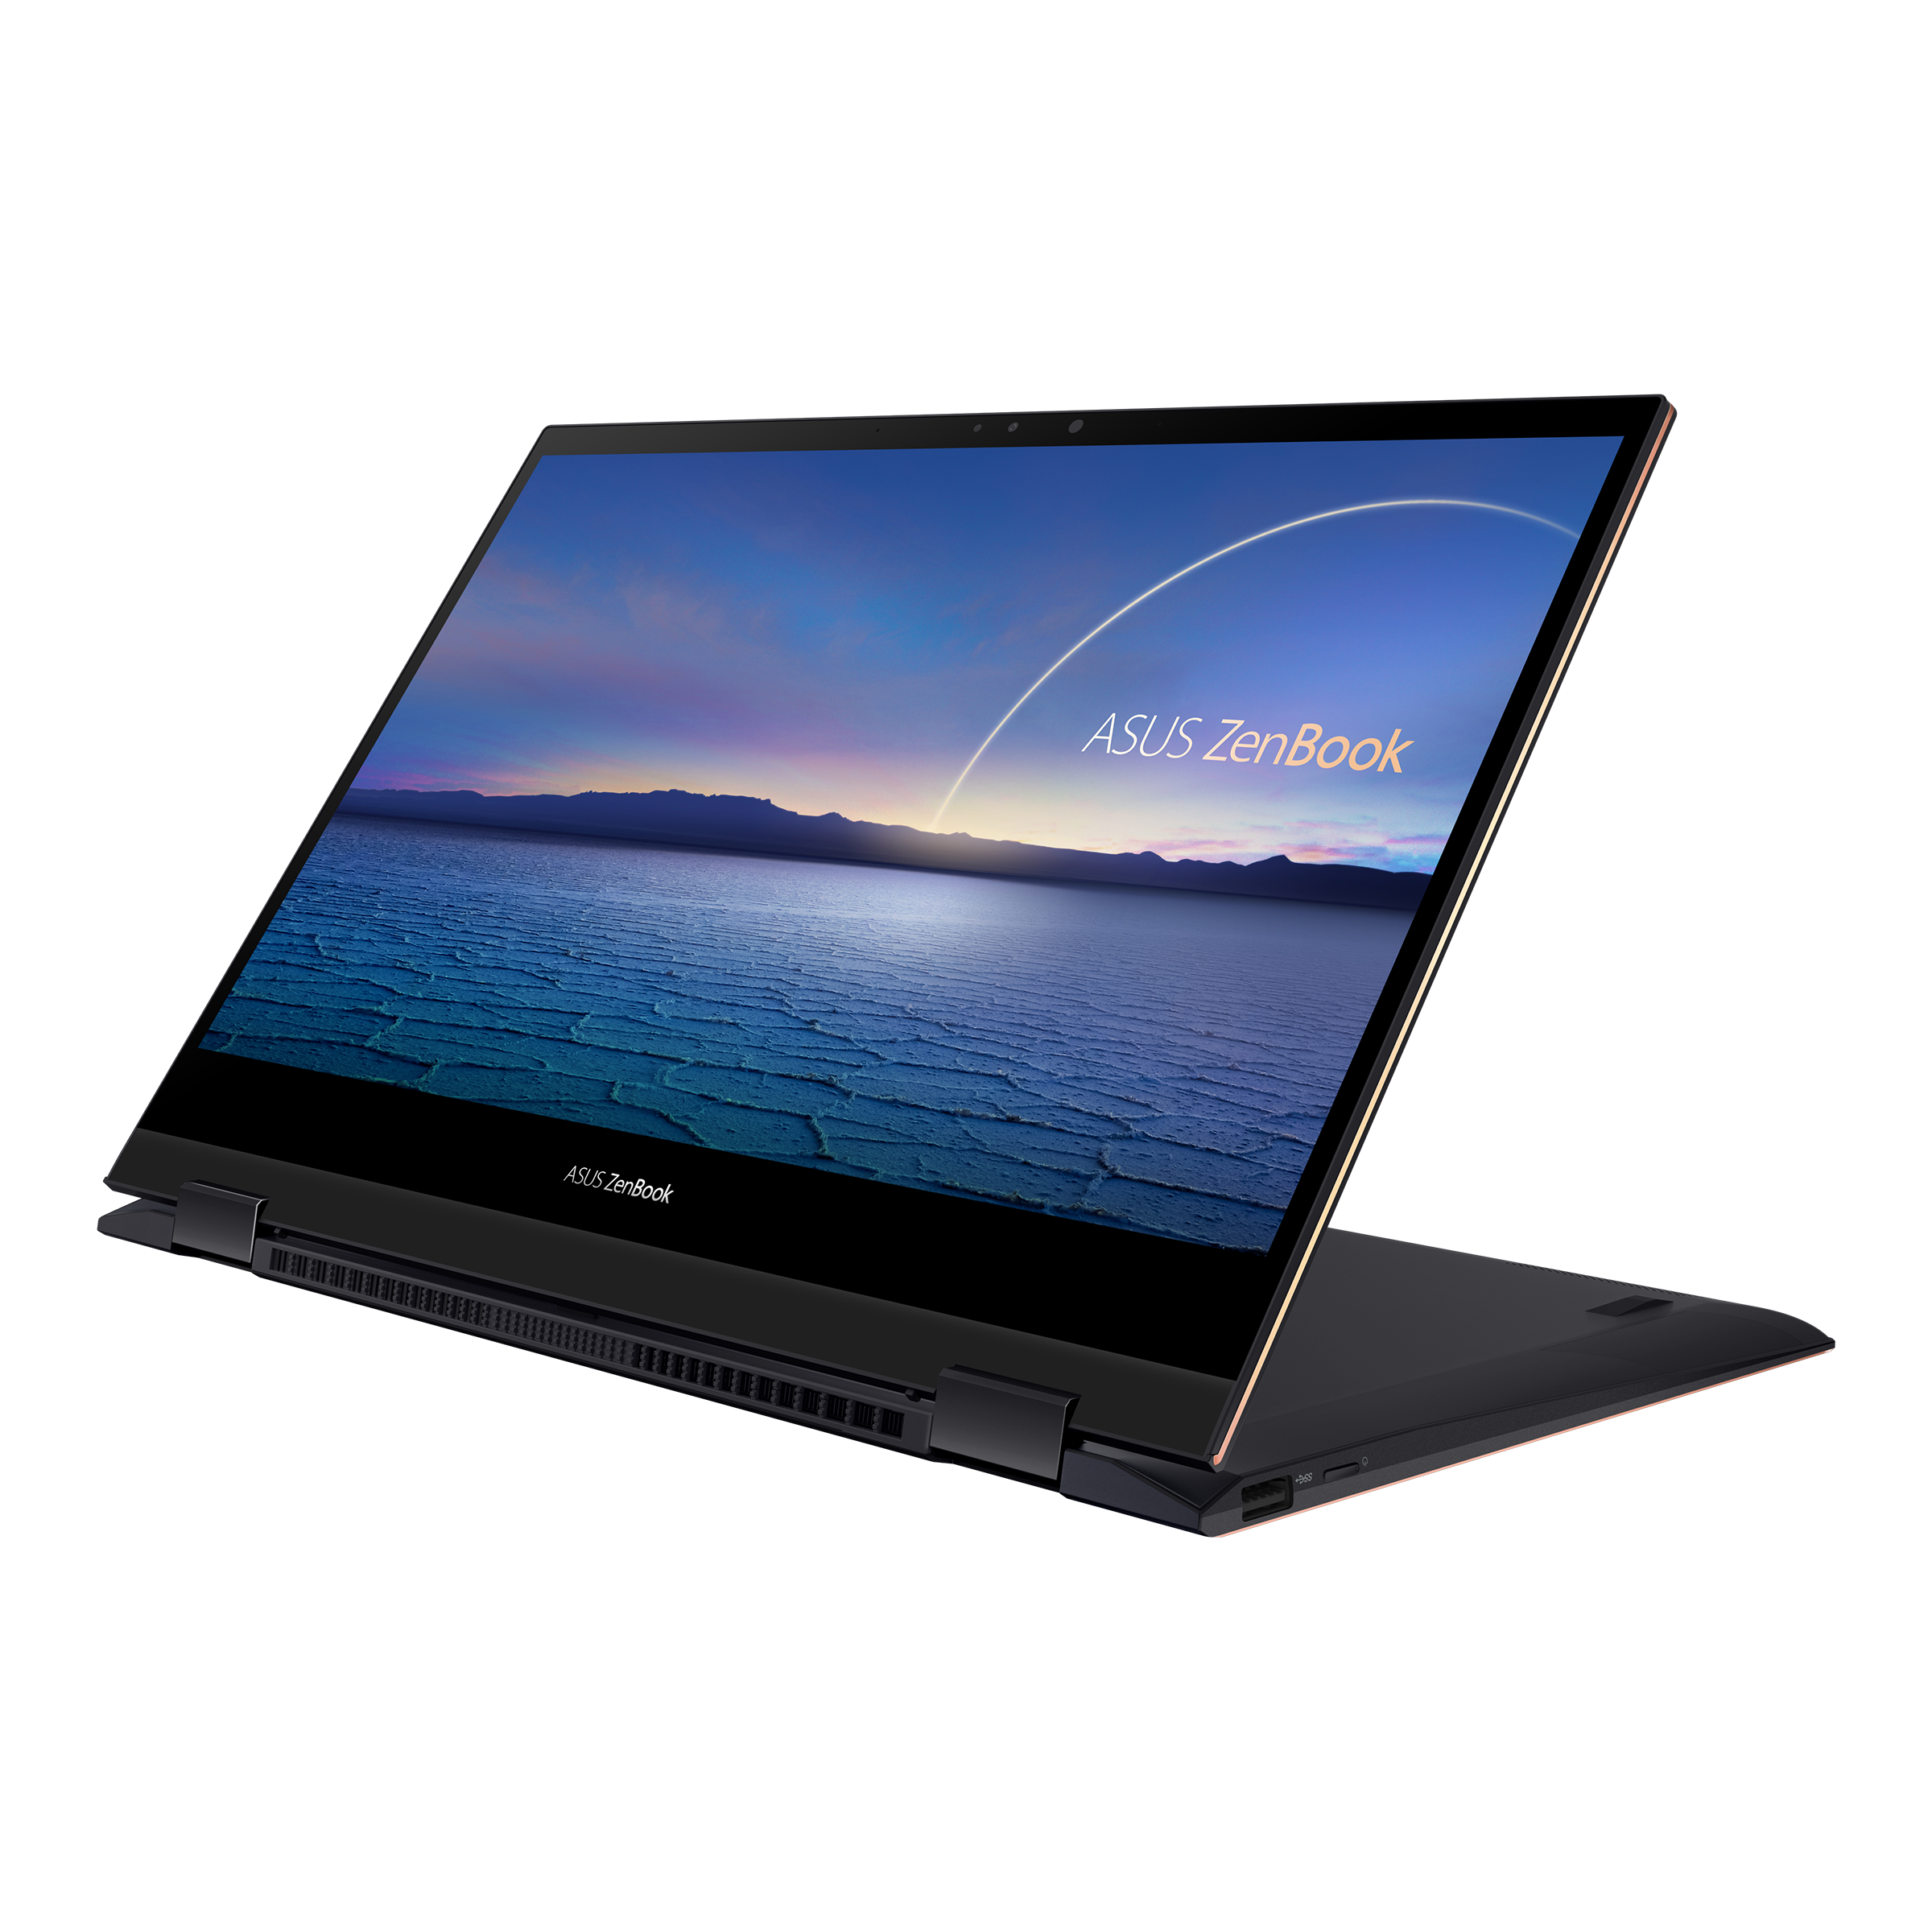 Asus Zenbook Flip S13 UX371EA-HL910WS - Laptop Tiangge